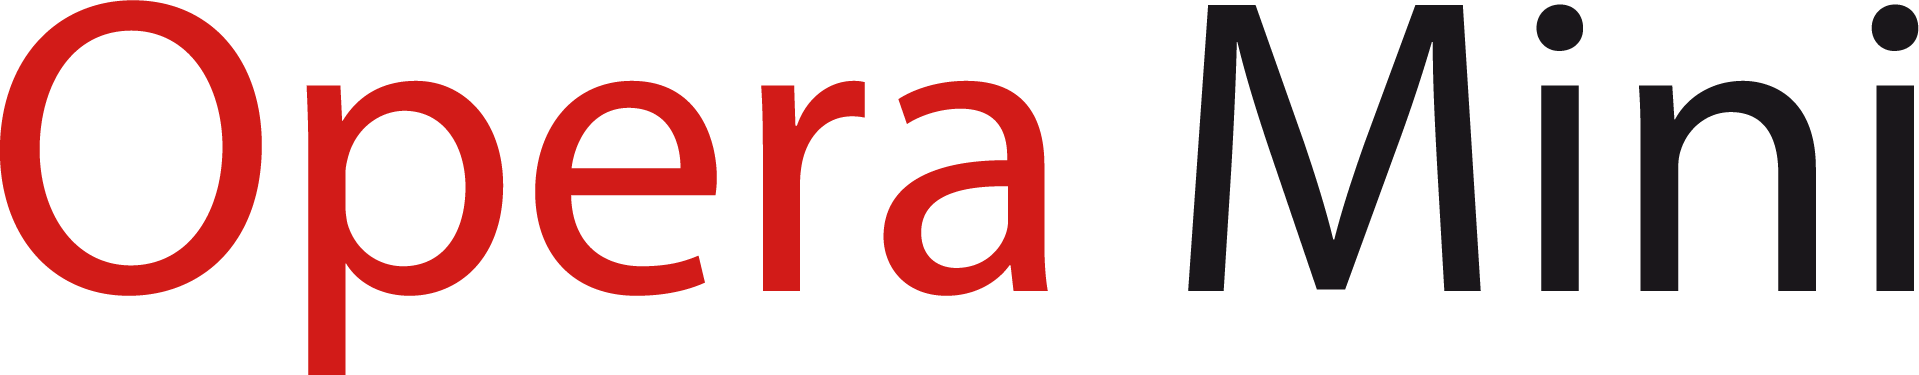 Opera Mini Logo - File:Opera Mini logo.png - Wikimedia Commons